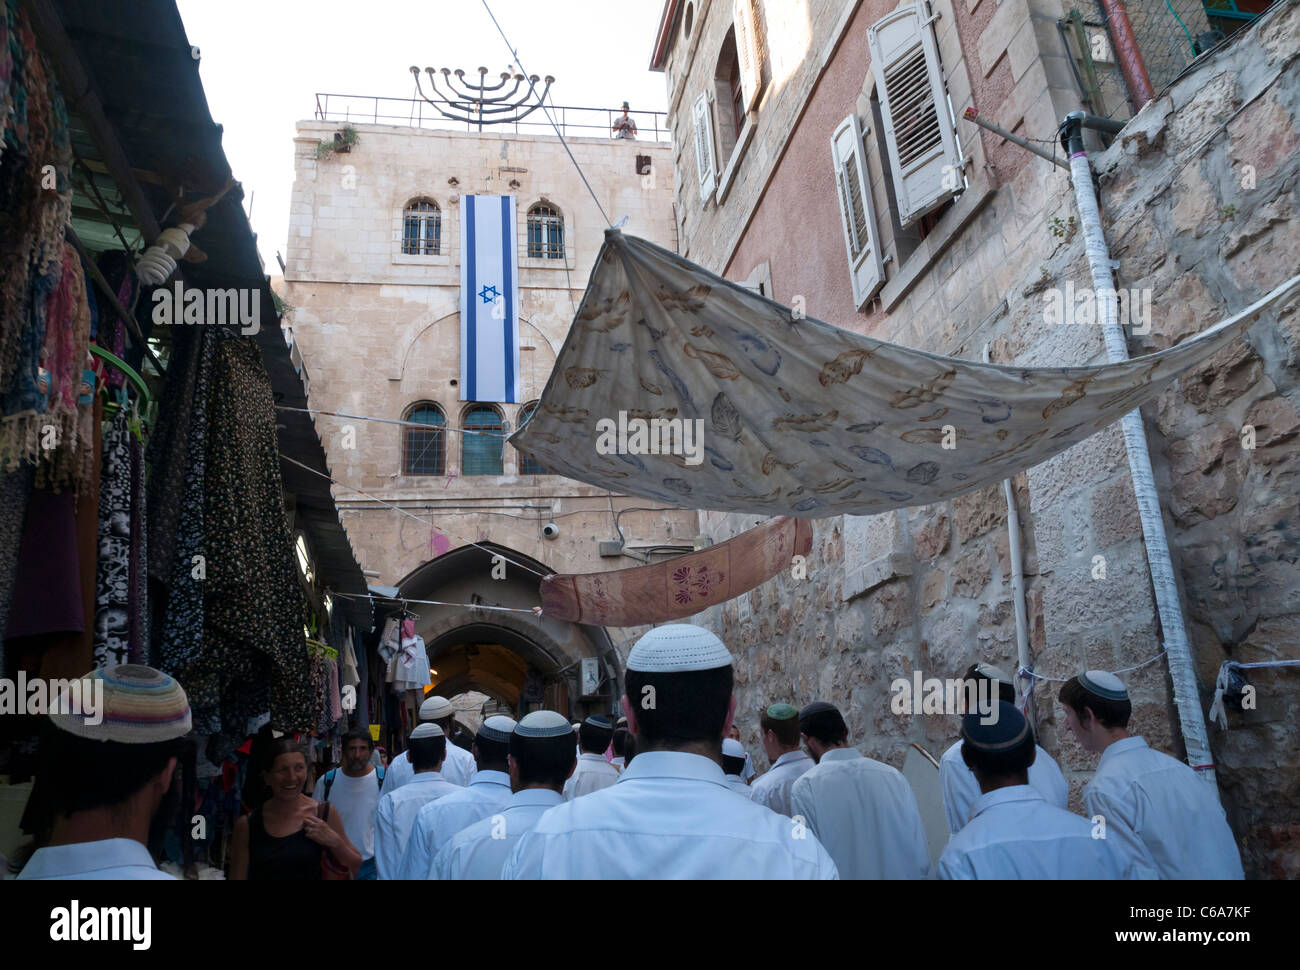 group of settlers wearing white shirts on Shabat walking by Sharon's house with israeli flag. muslem Quarter. Jerusalem Old City Stock Photo